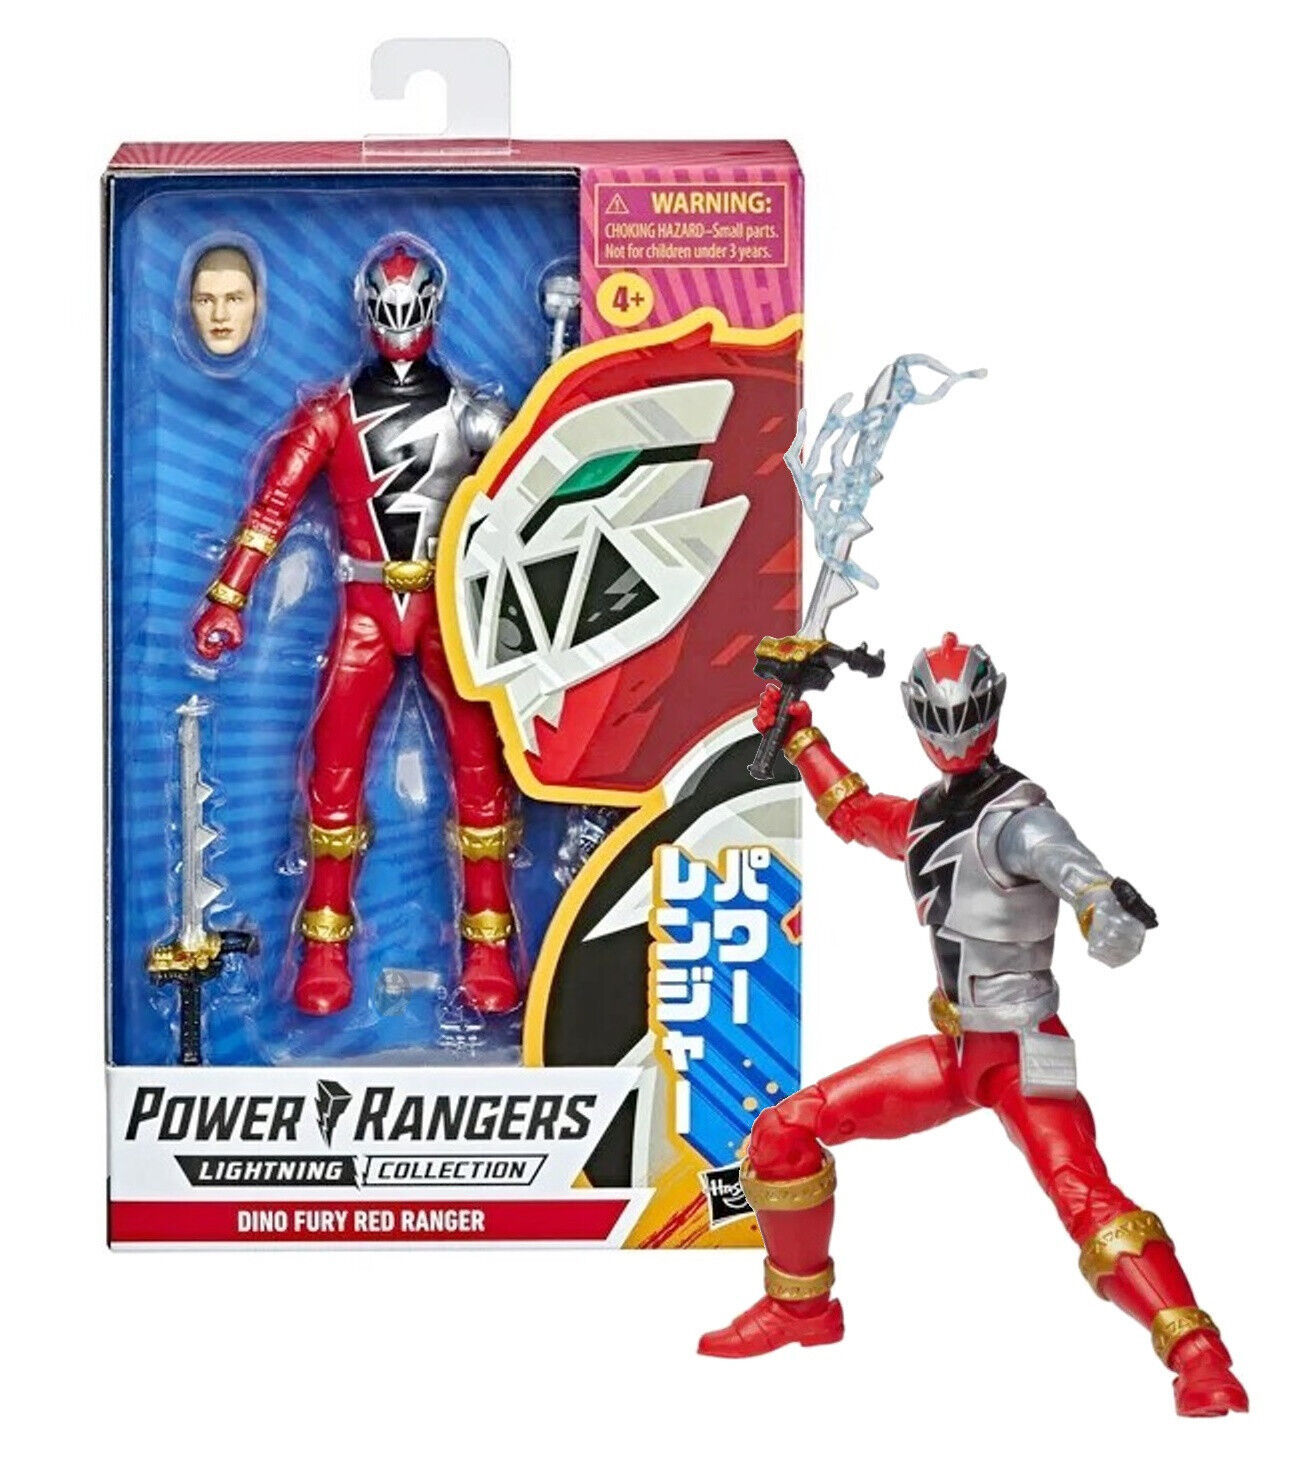 Power Rangers Lightning Collection Dino Fury Red Ranger 6" Figure MIB - $14.88